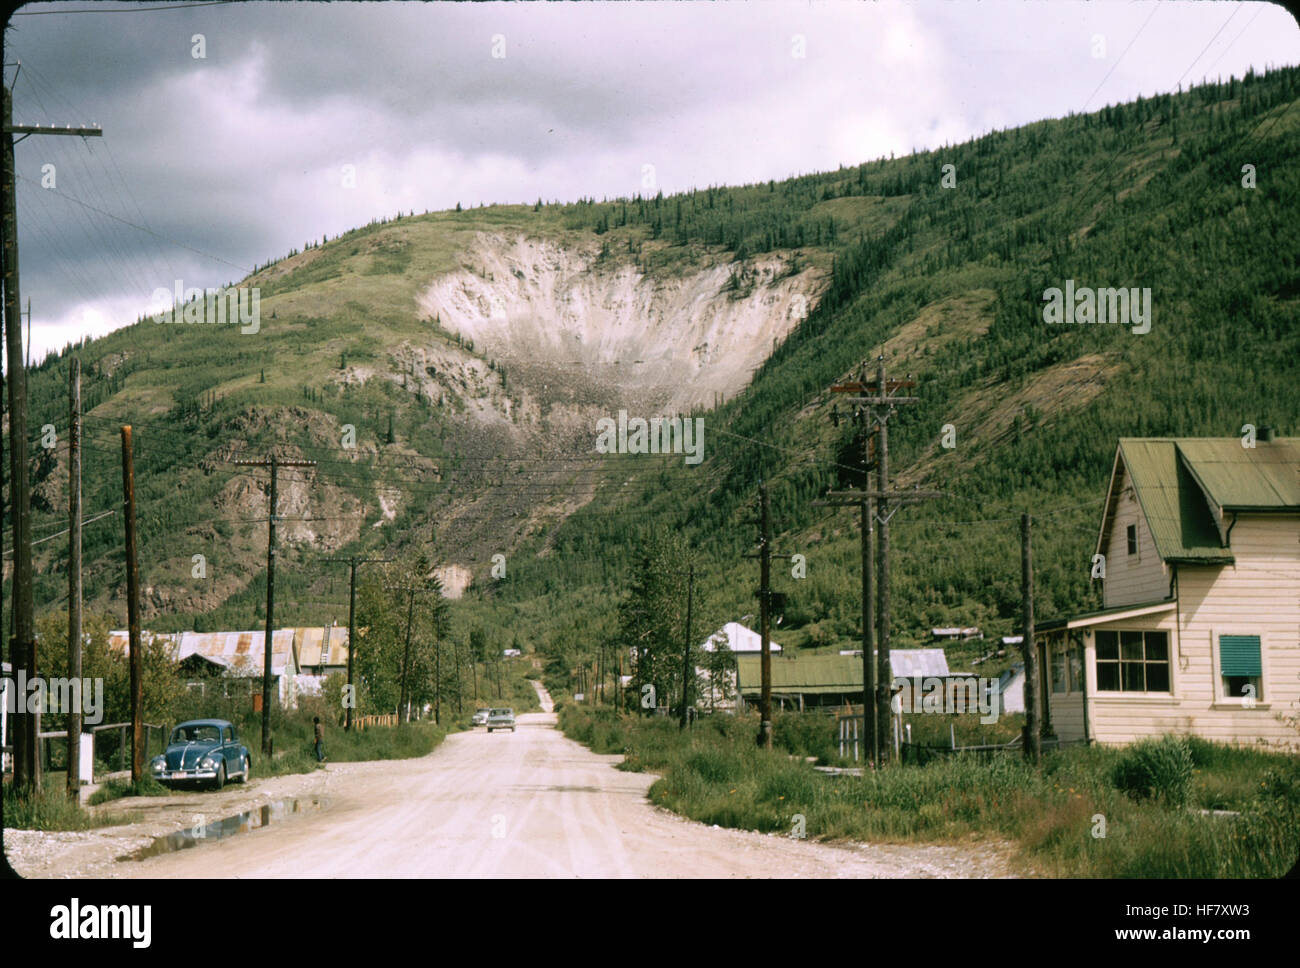 Streetscene and landslide at mountain side; Dawson, Yukon Territory, Canada. Stock Photo